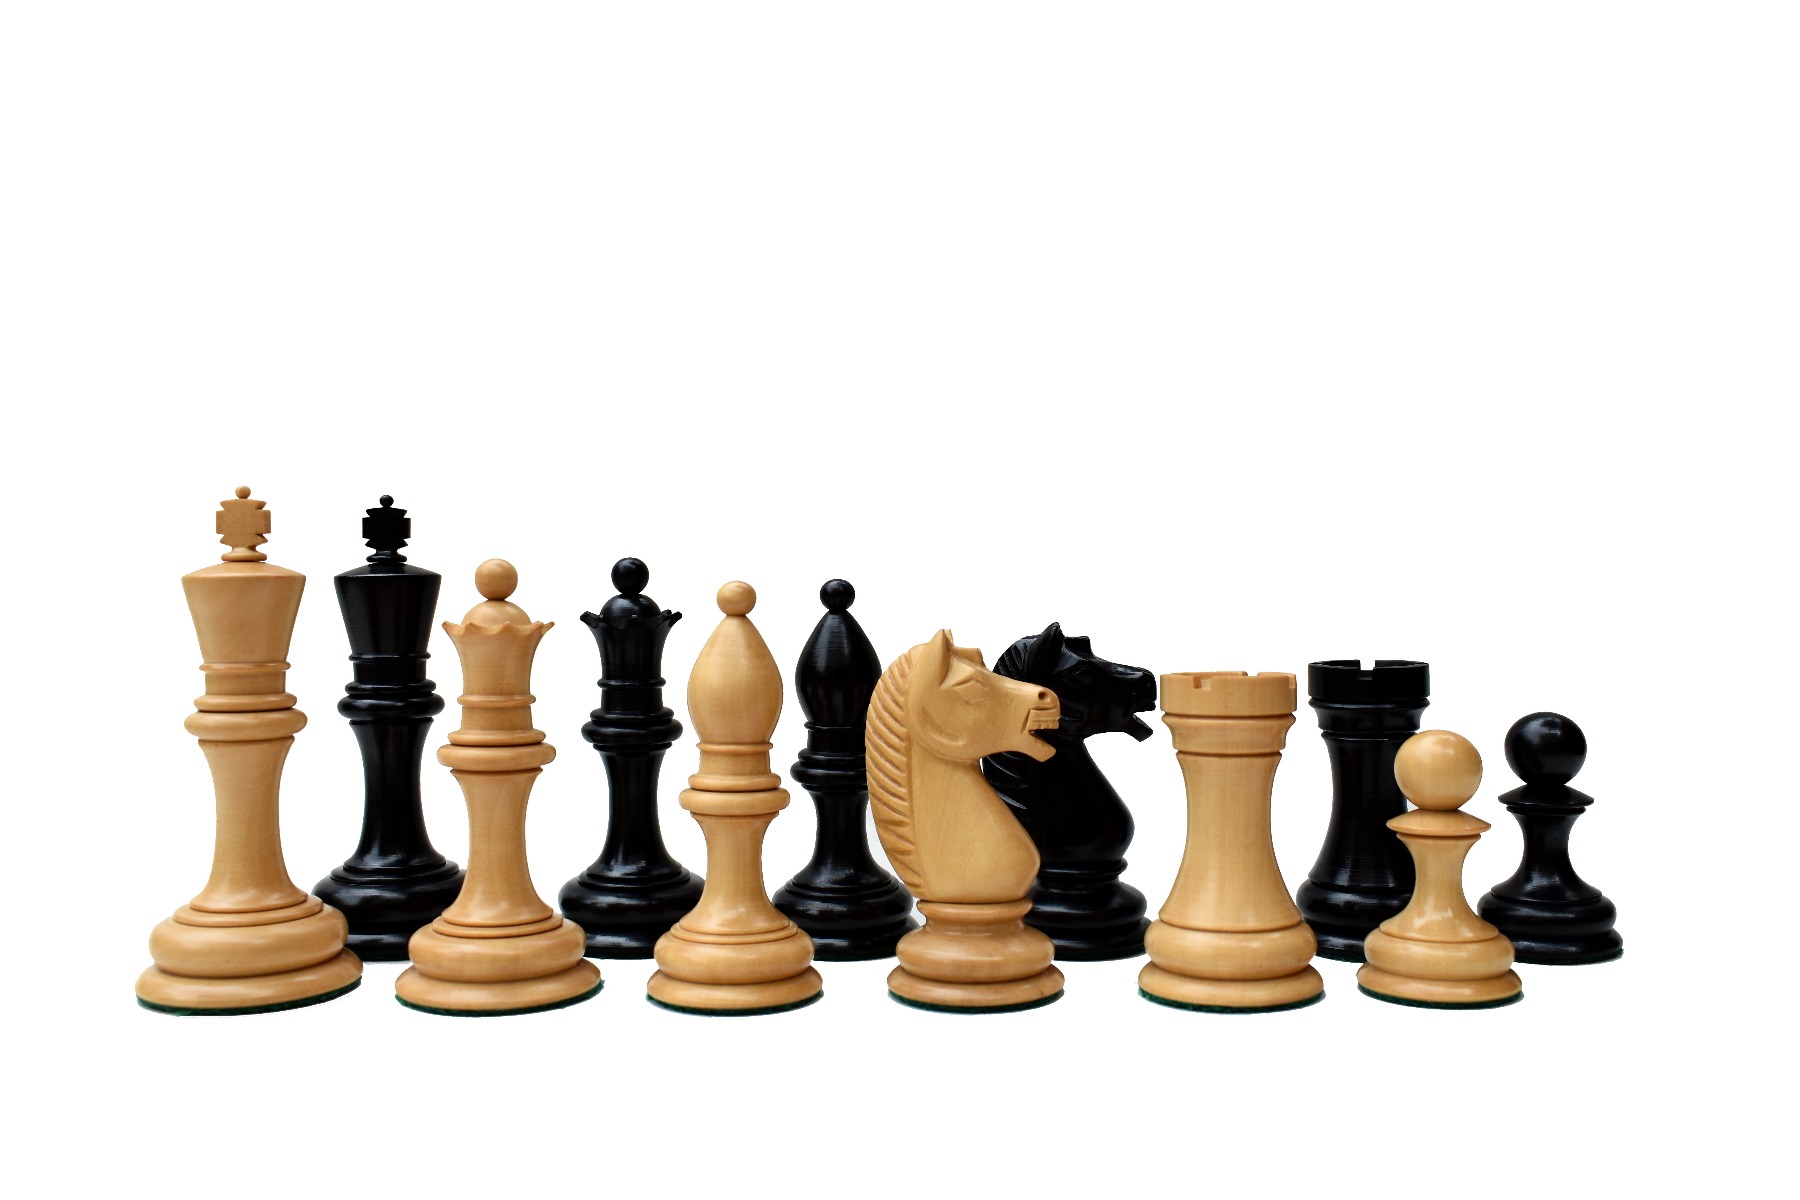 Botvinnik-Flohr II Soviet Reproduction Chess Pieces